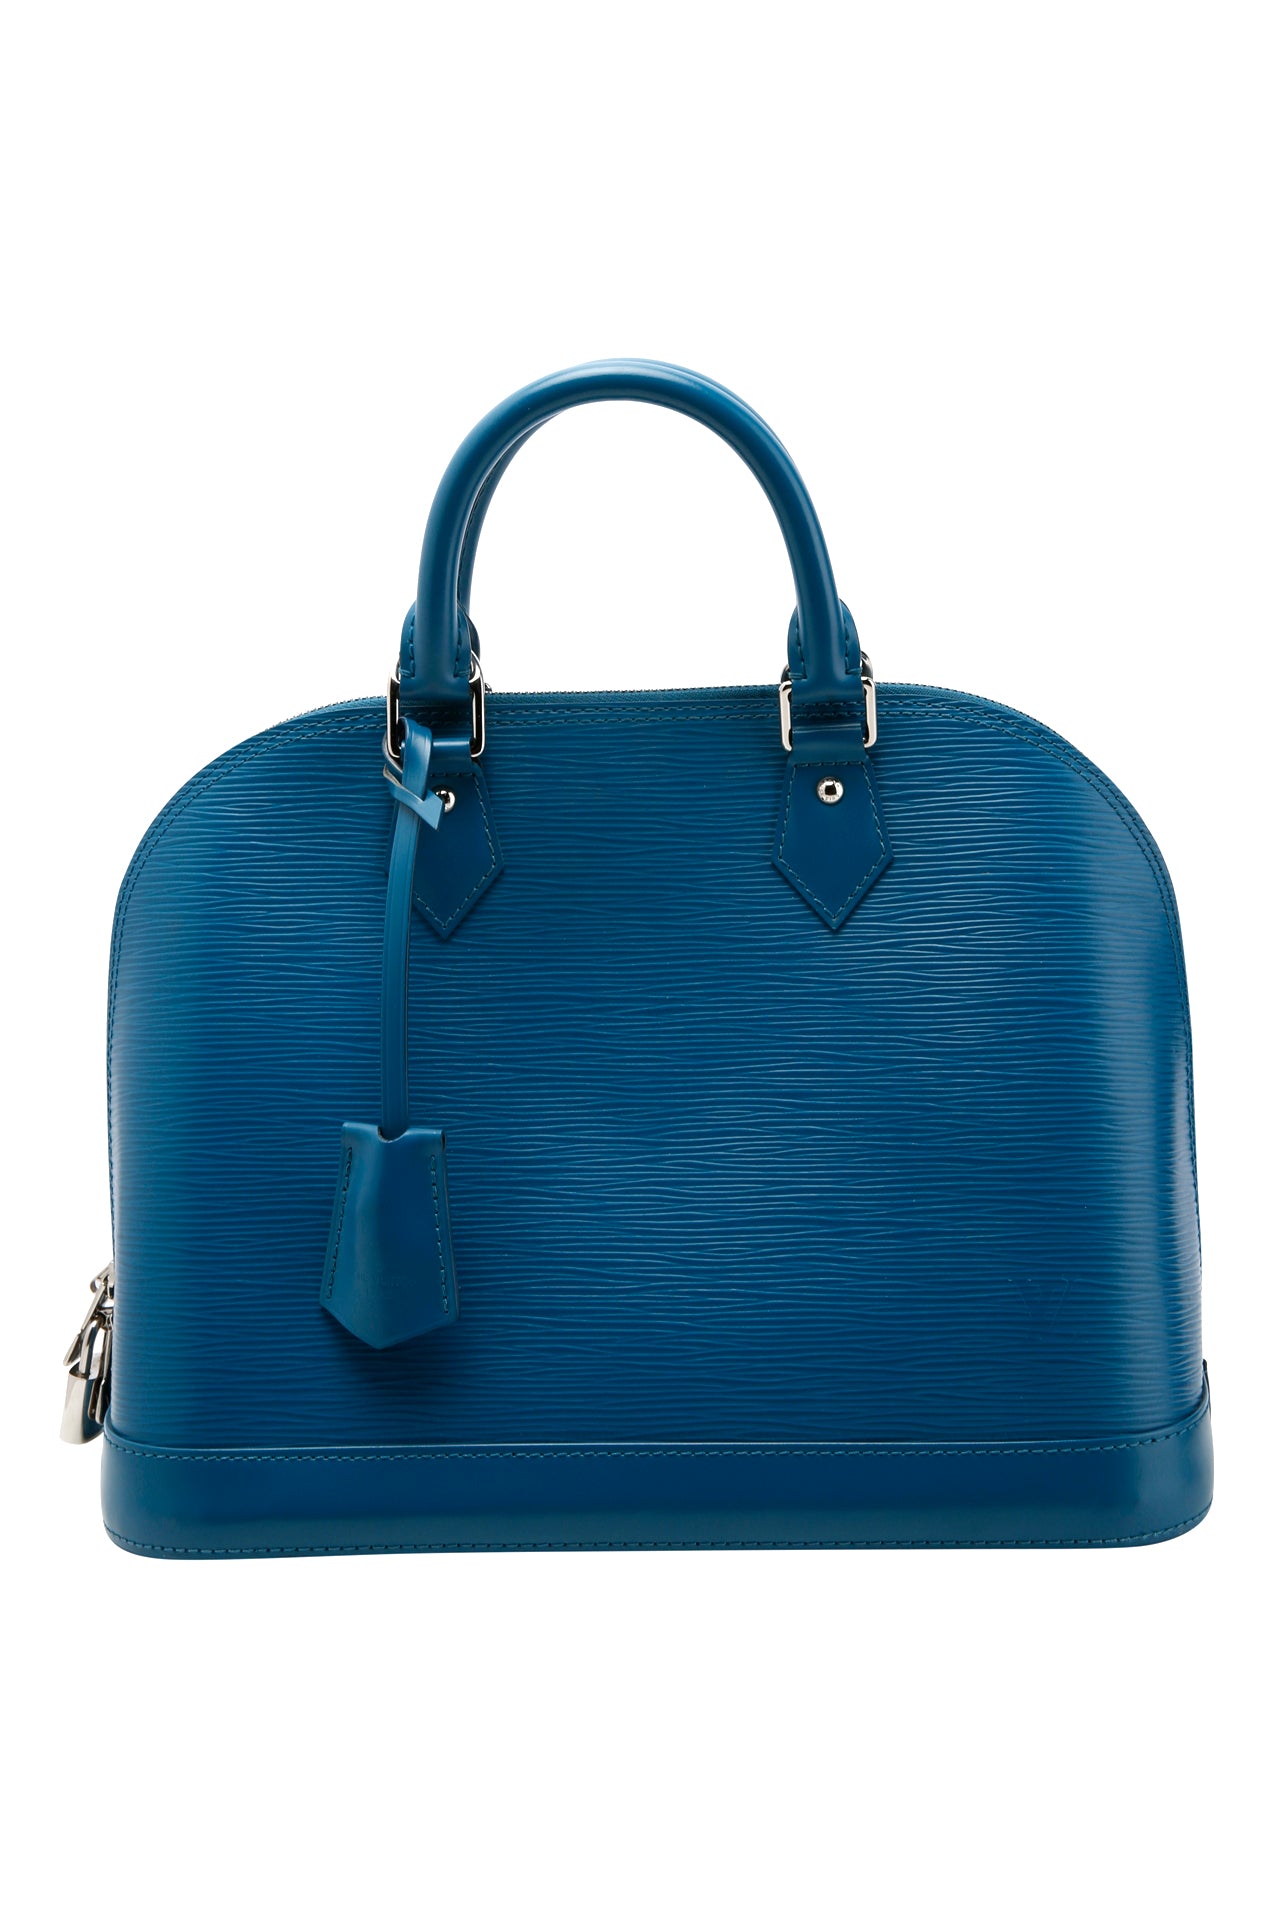 Louis Vuitton Epi Leather Alma PM Bag Blue